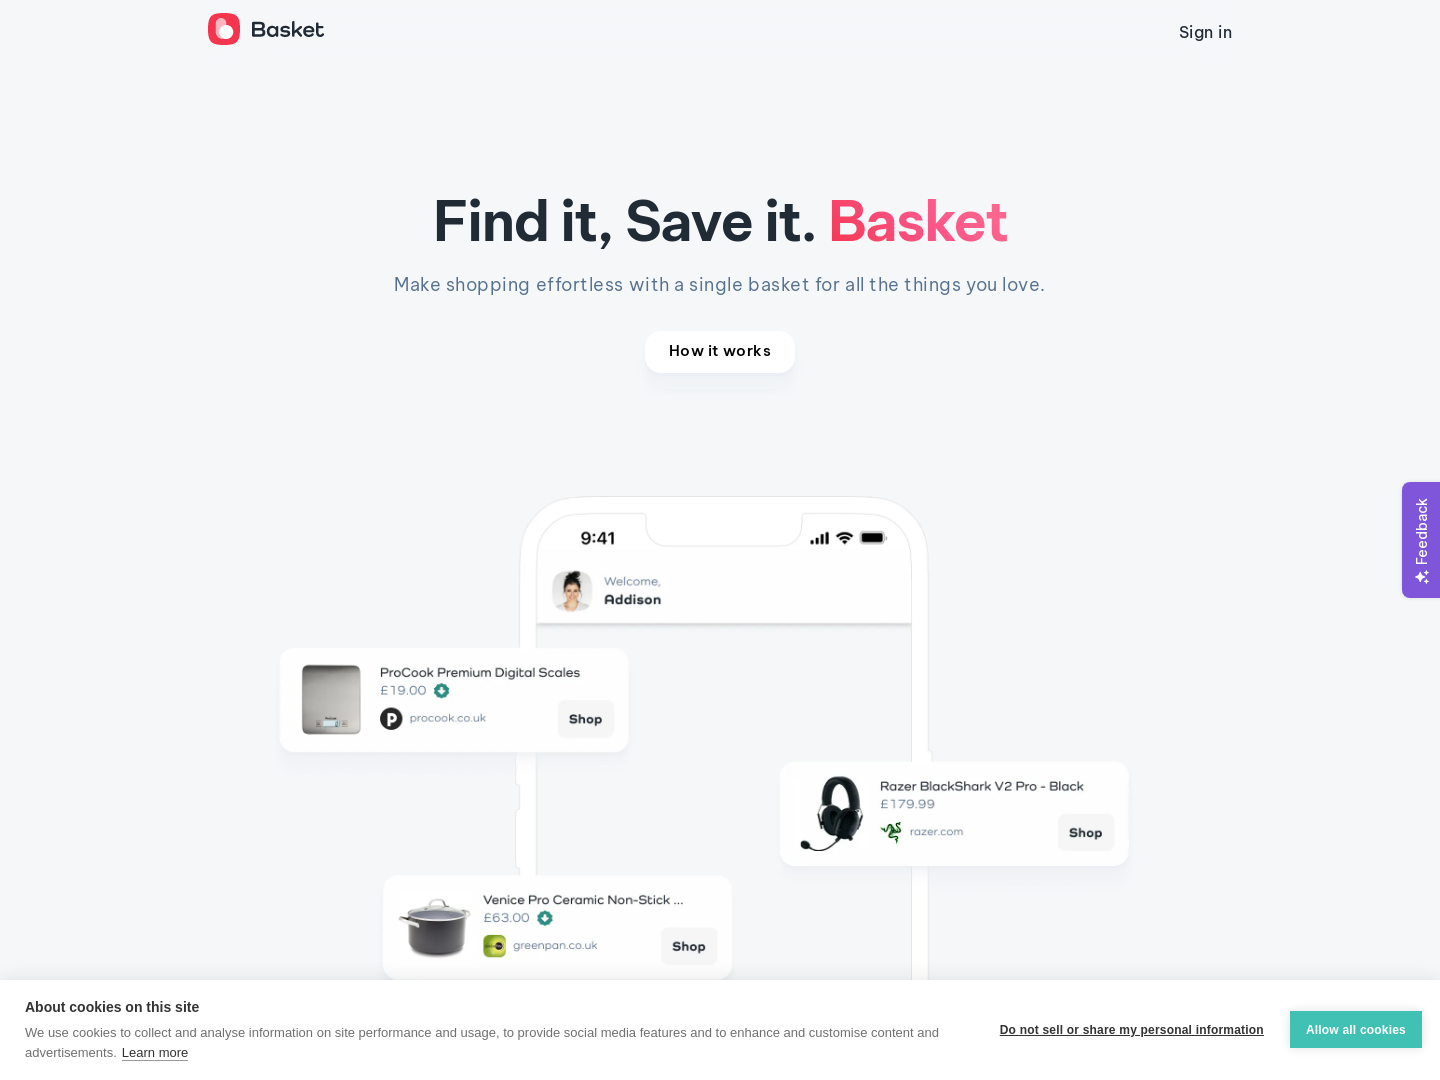 Basket: Thriving Start-Up Revolutionizing Global Online Shopping